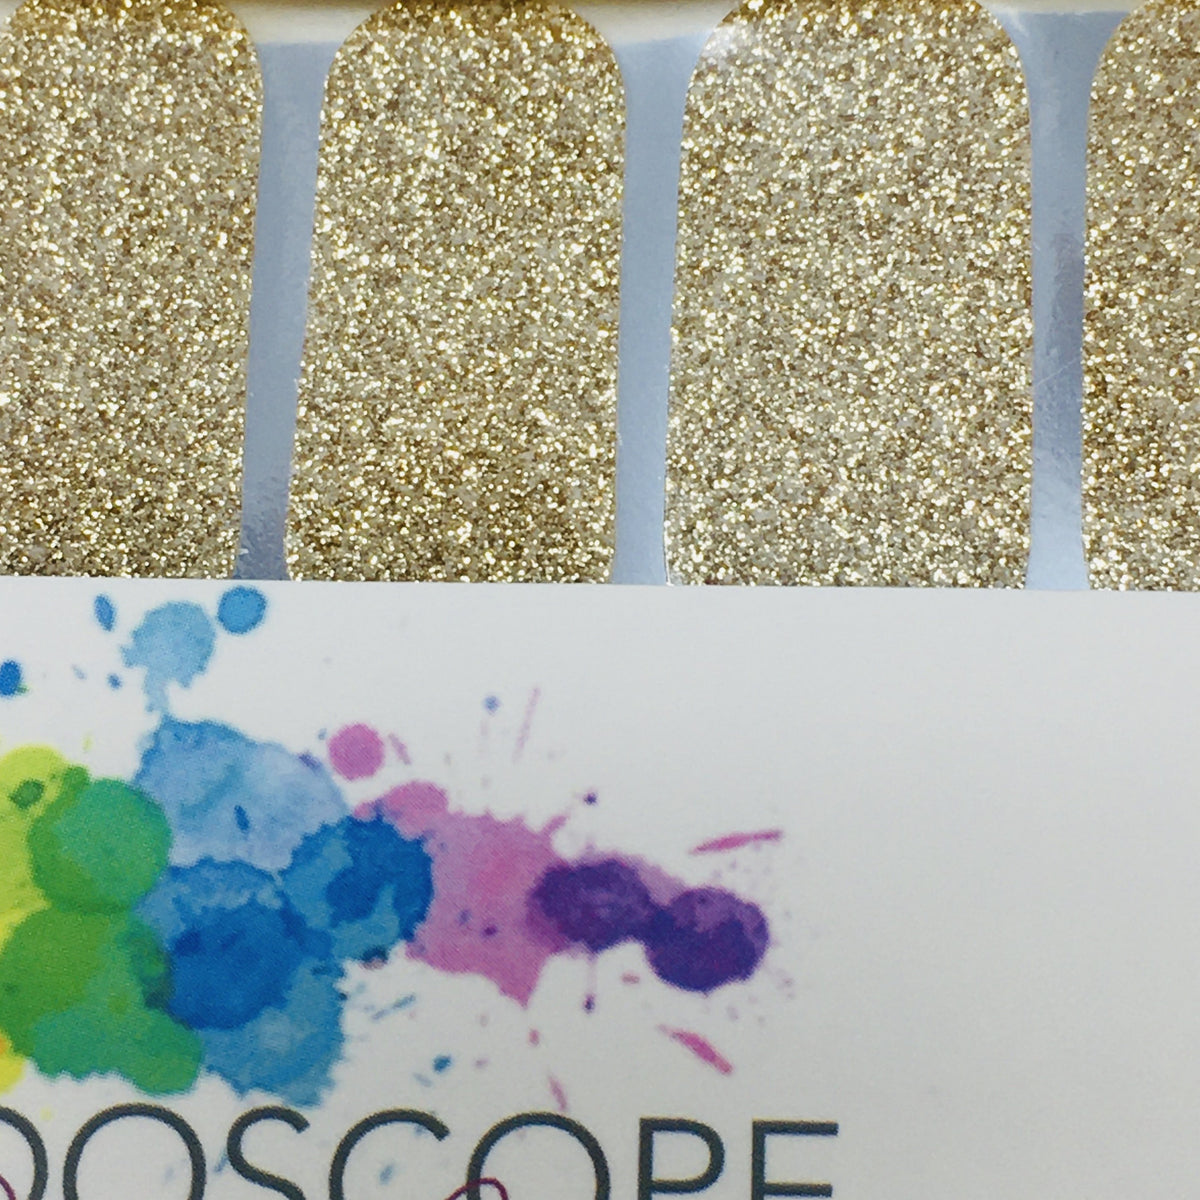 Kaleidoscope Nail Strip Sparkly Collection